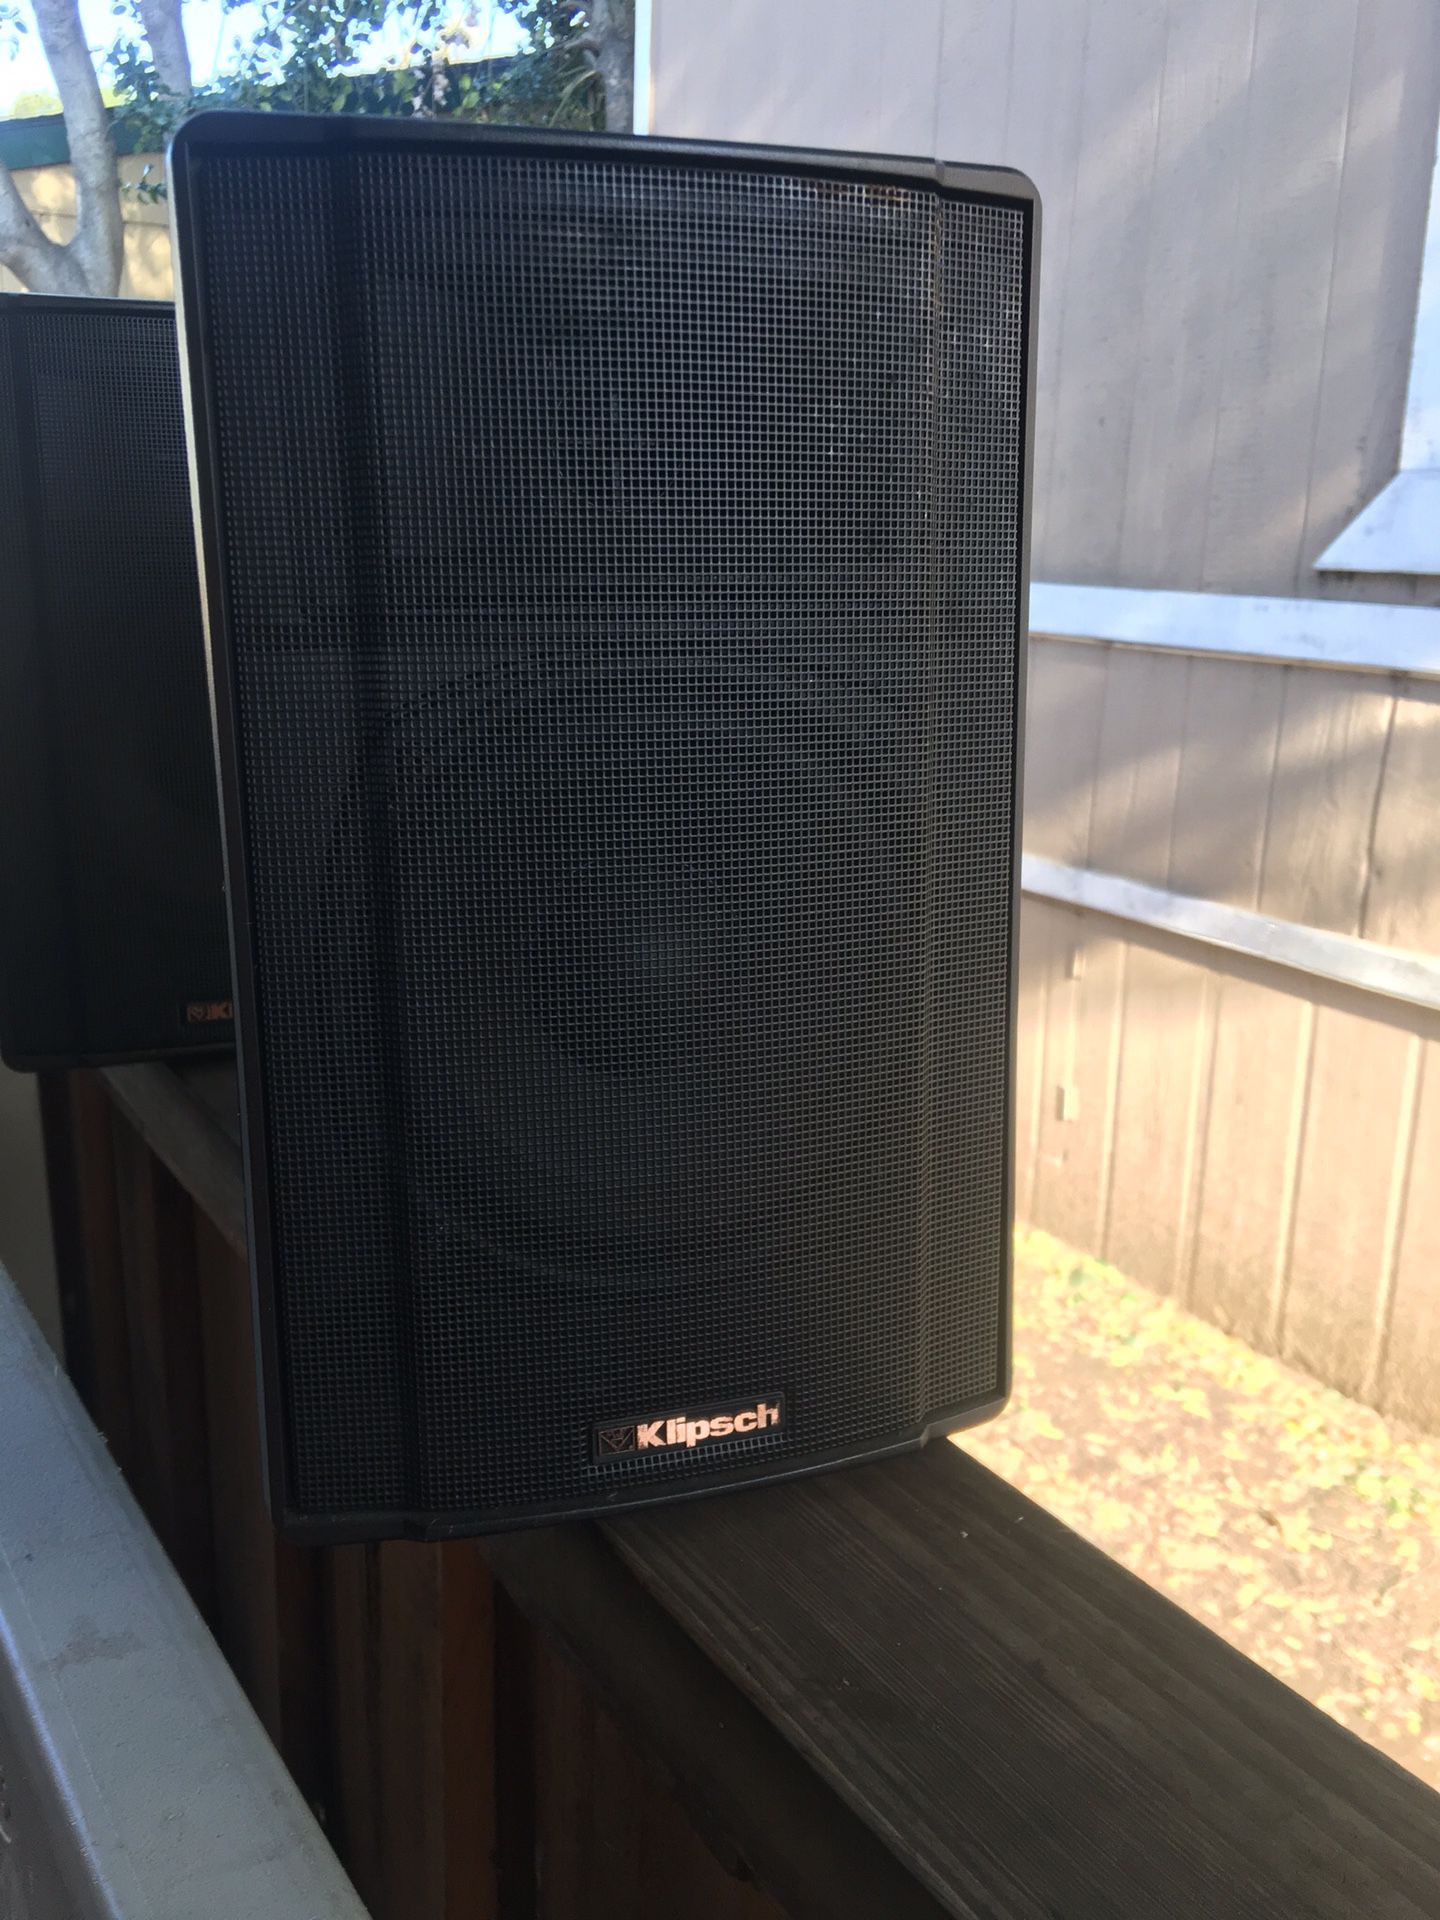 3 pcs. klipsch speaker 7” wide and 10” tall